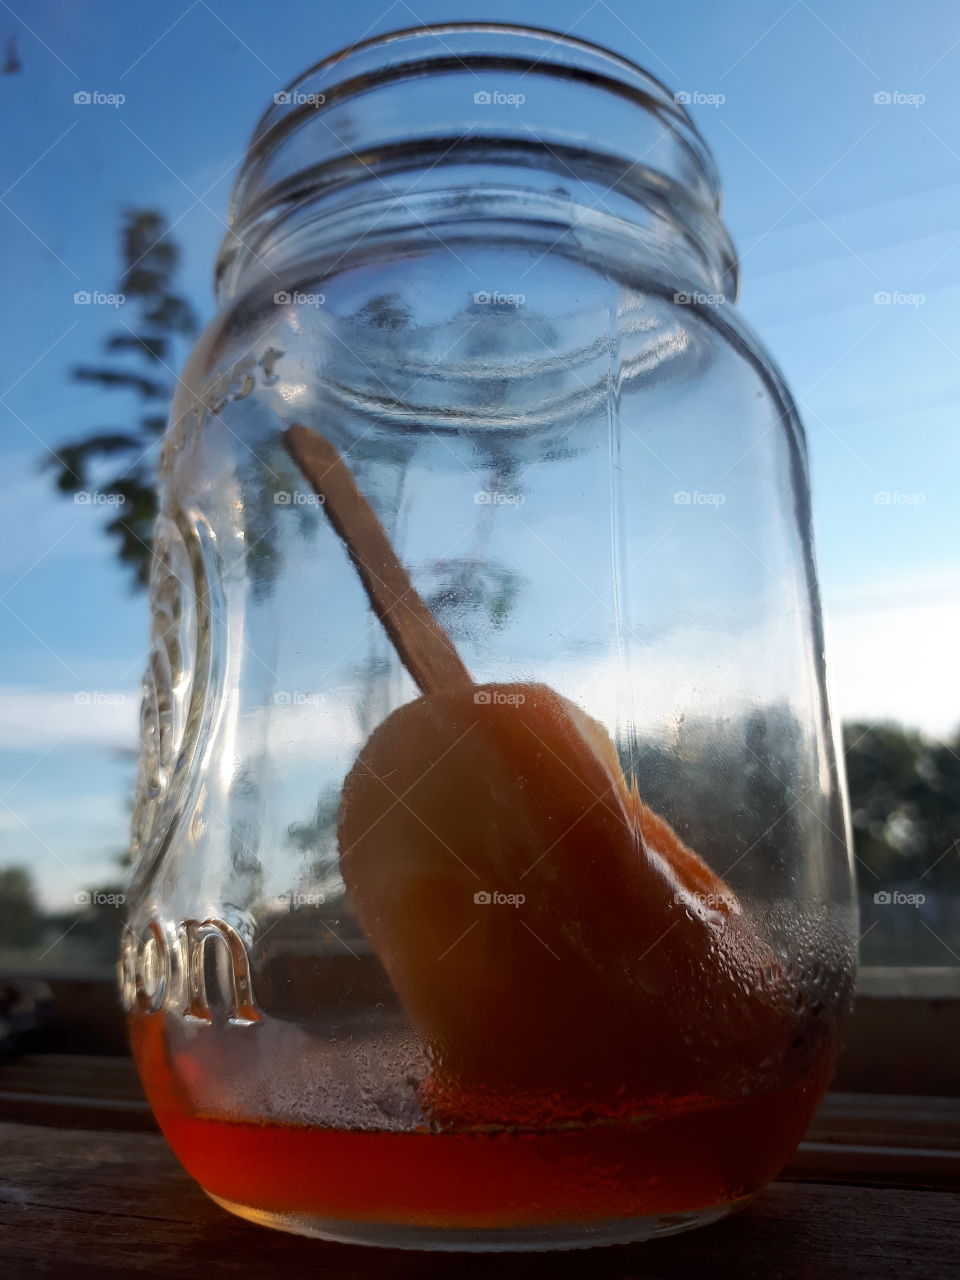 Popsicle in a jar